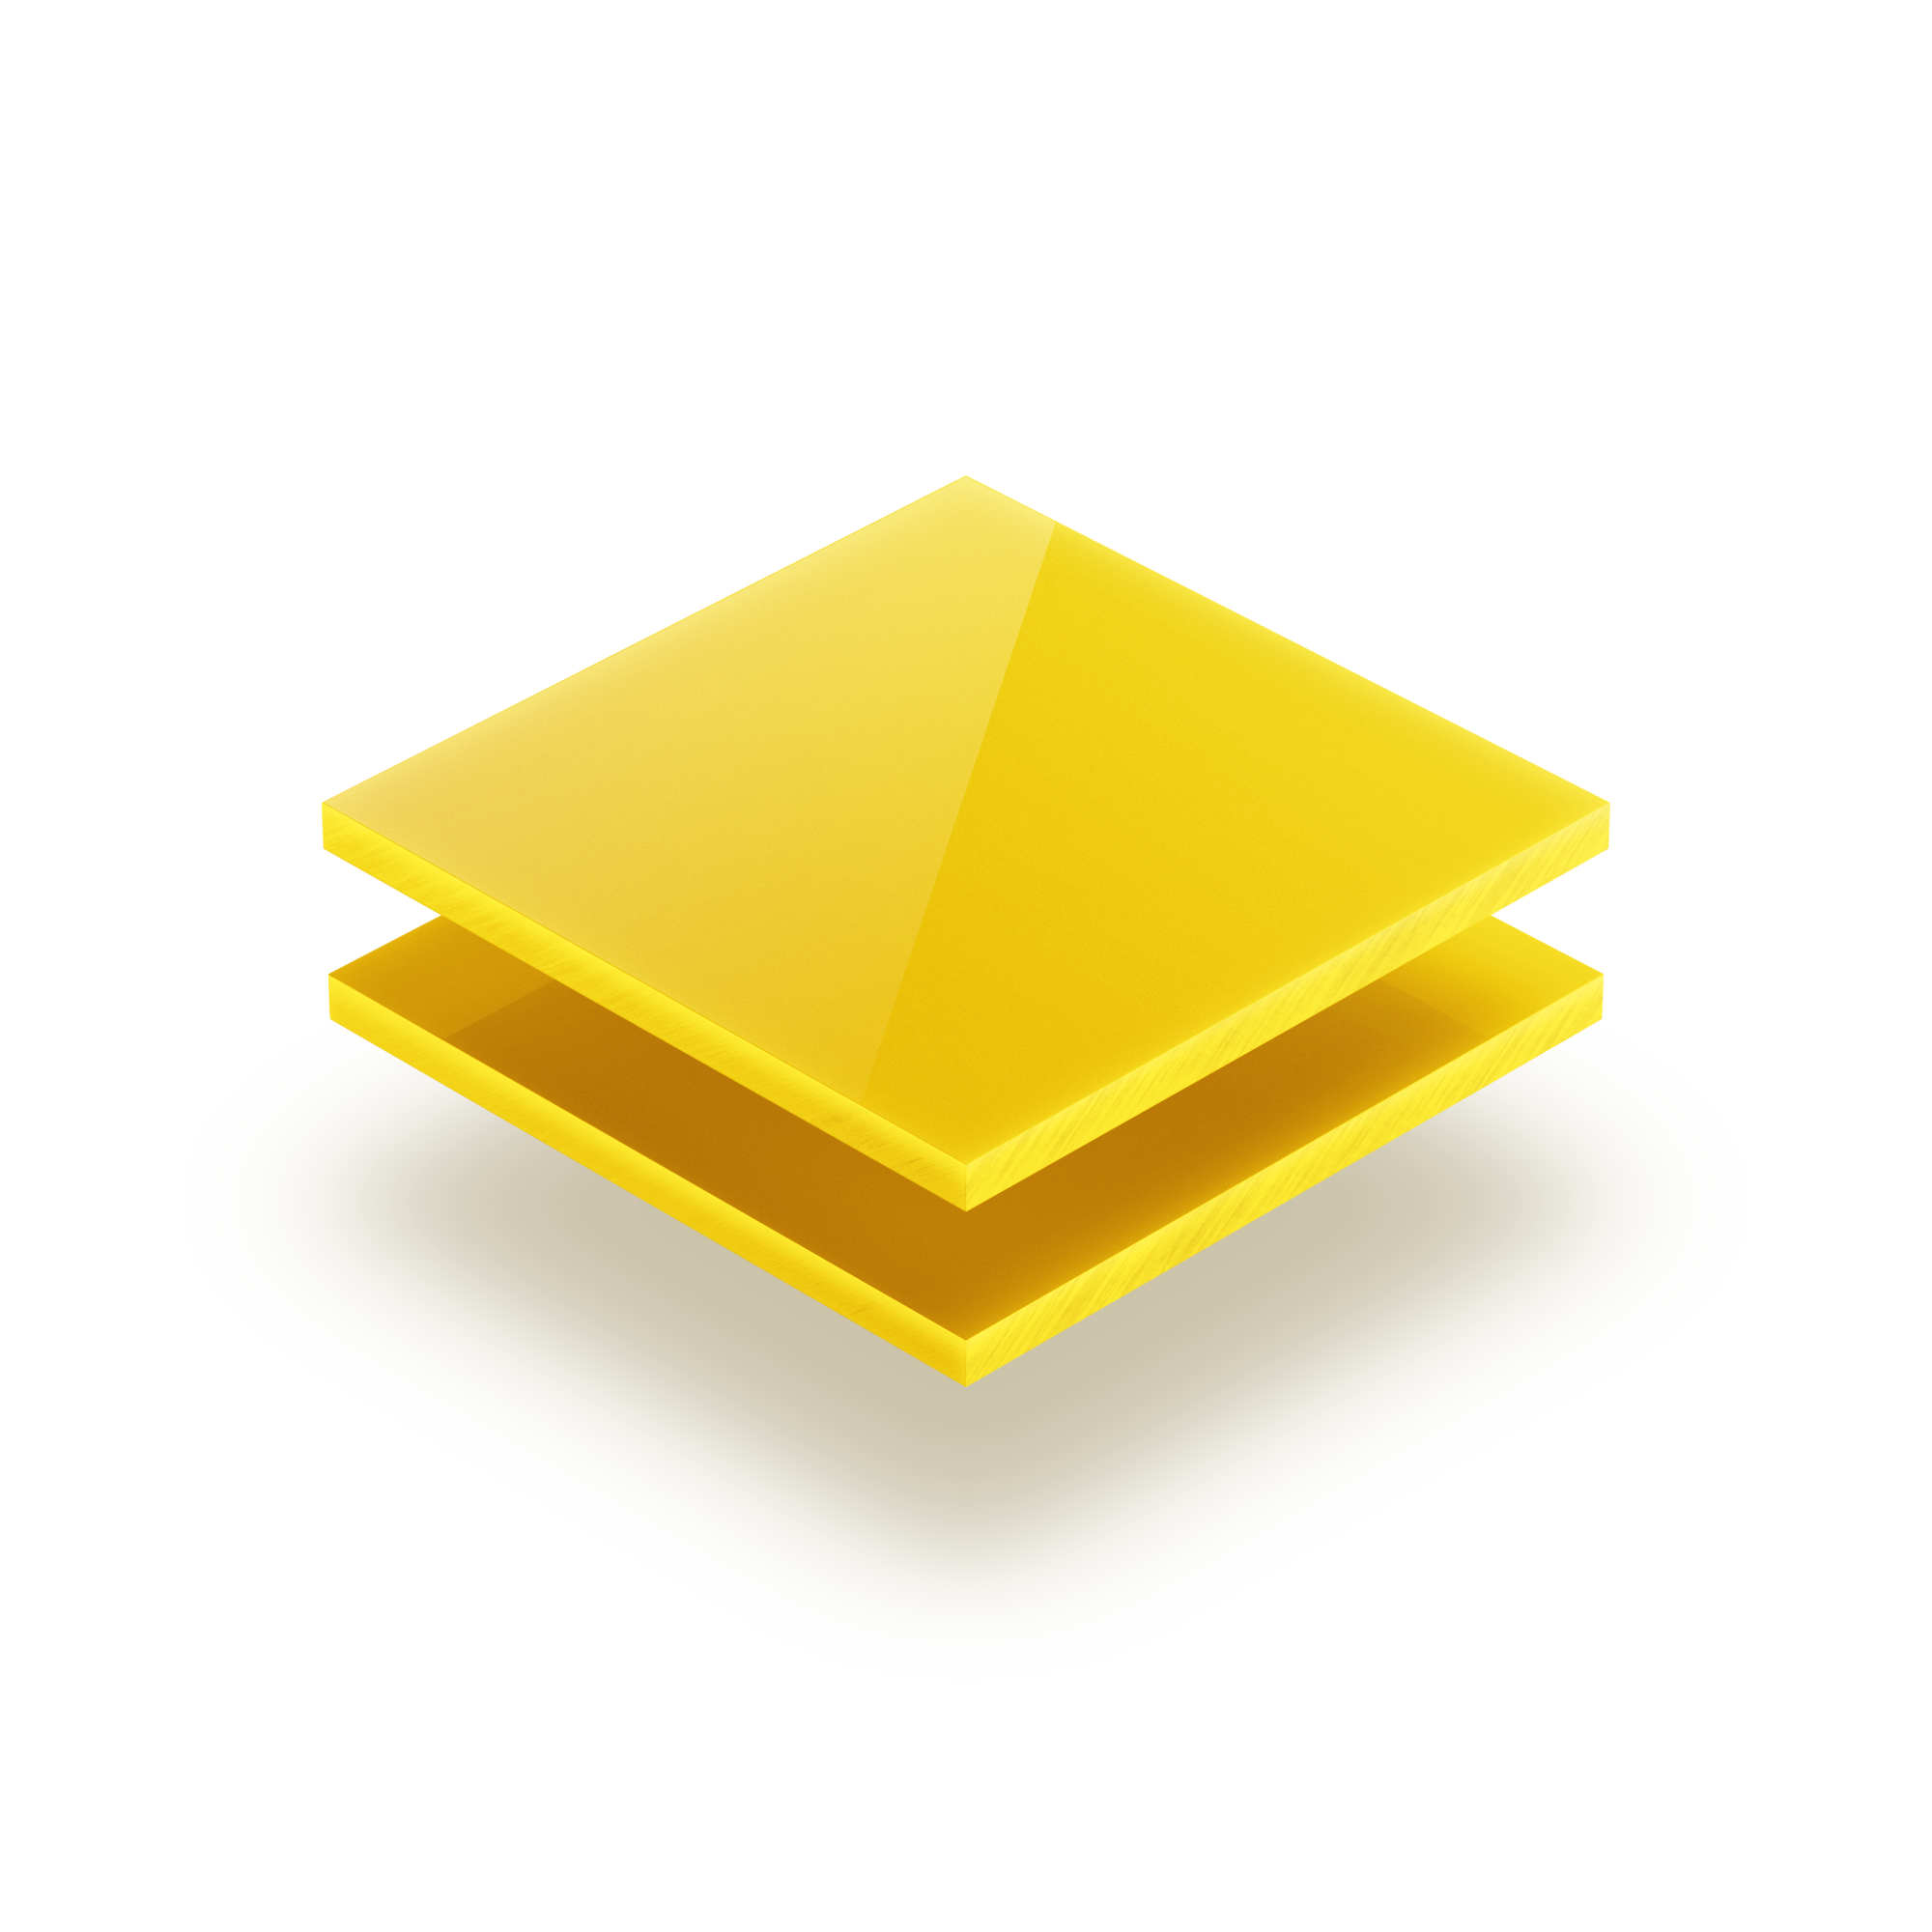 https://plexiglasssurmesure.fr/wp-content/uploads/2018/10/Plaque-plexiglass-jaune-opale-3mm.png